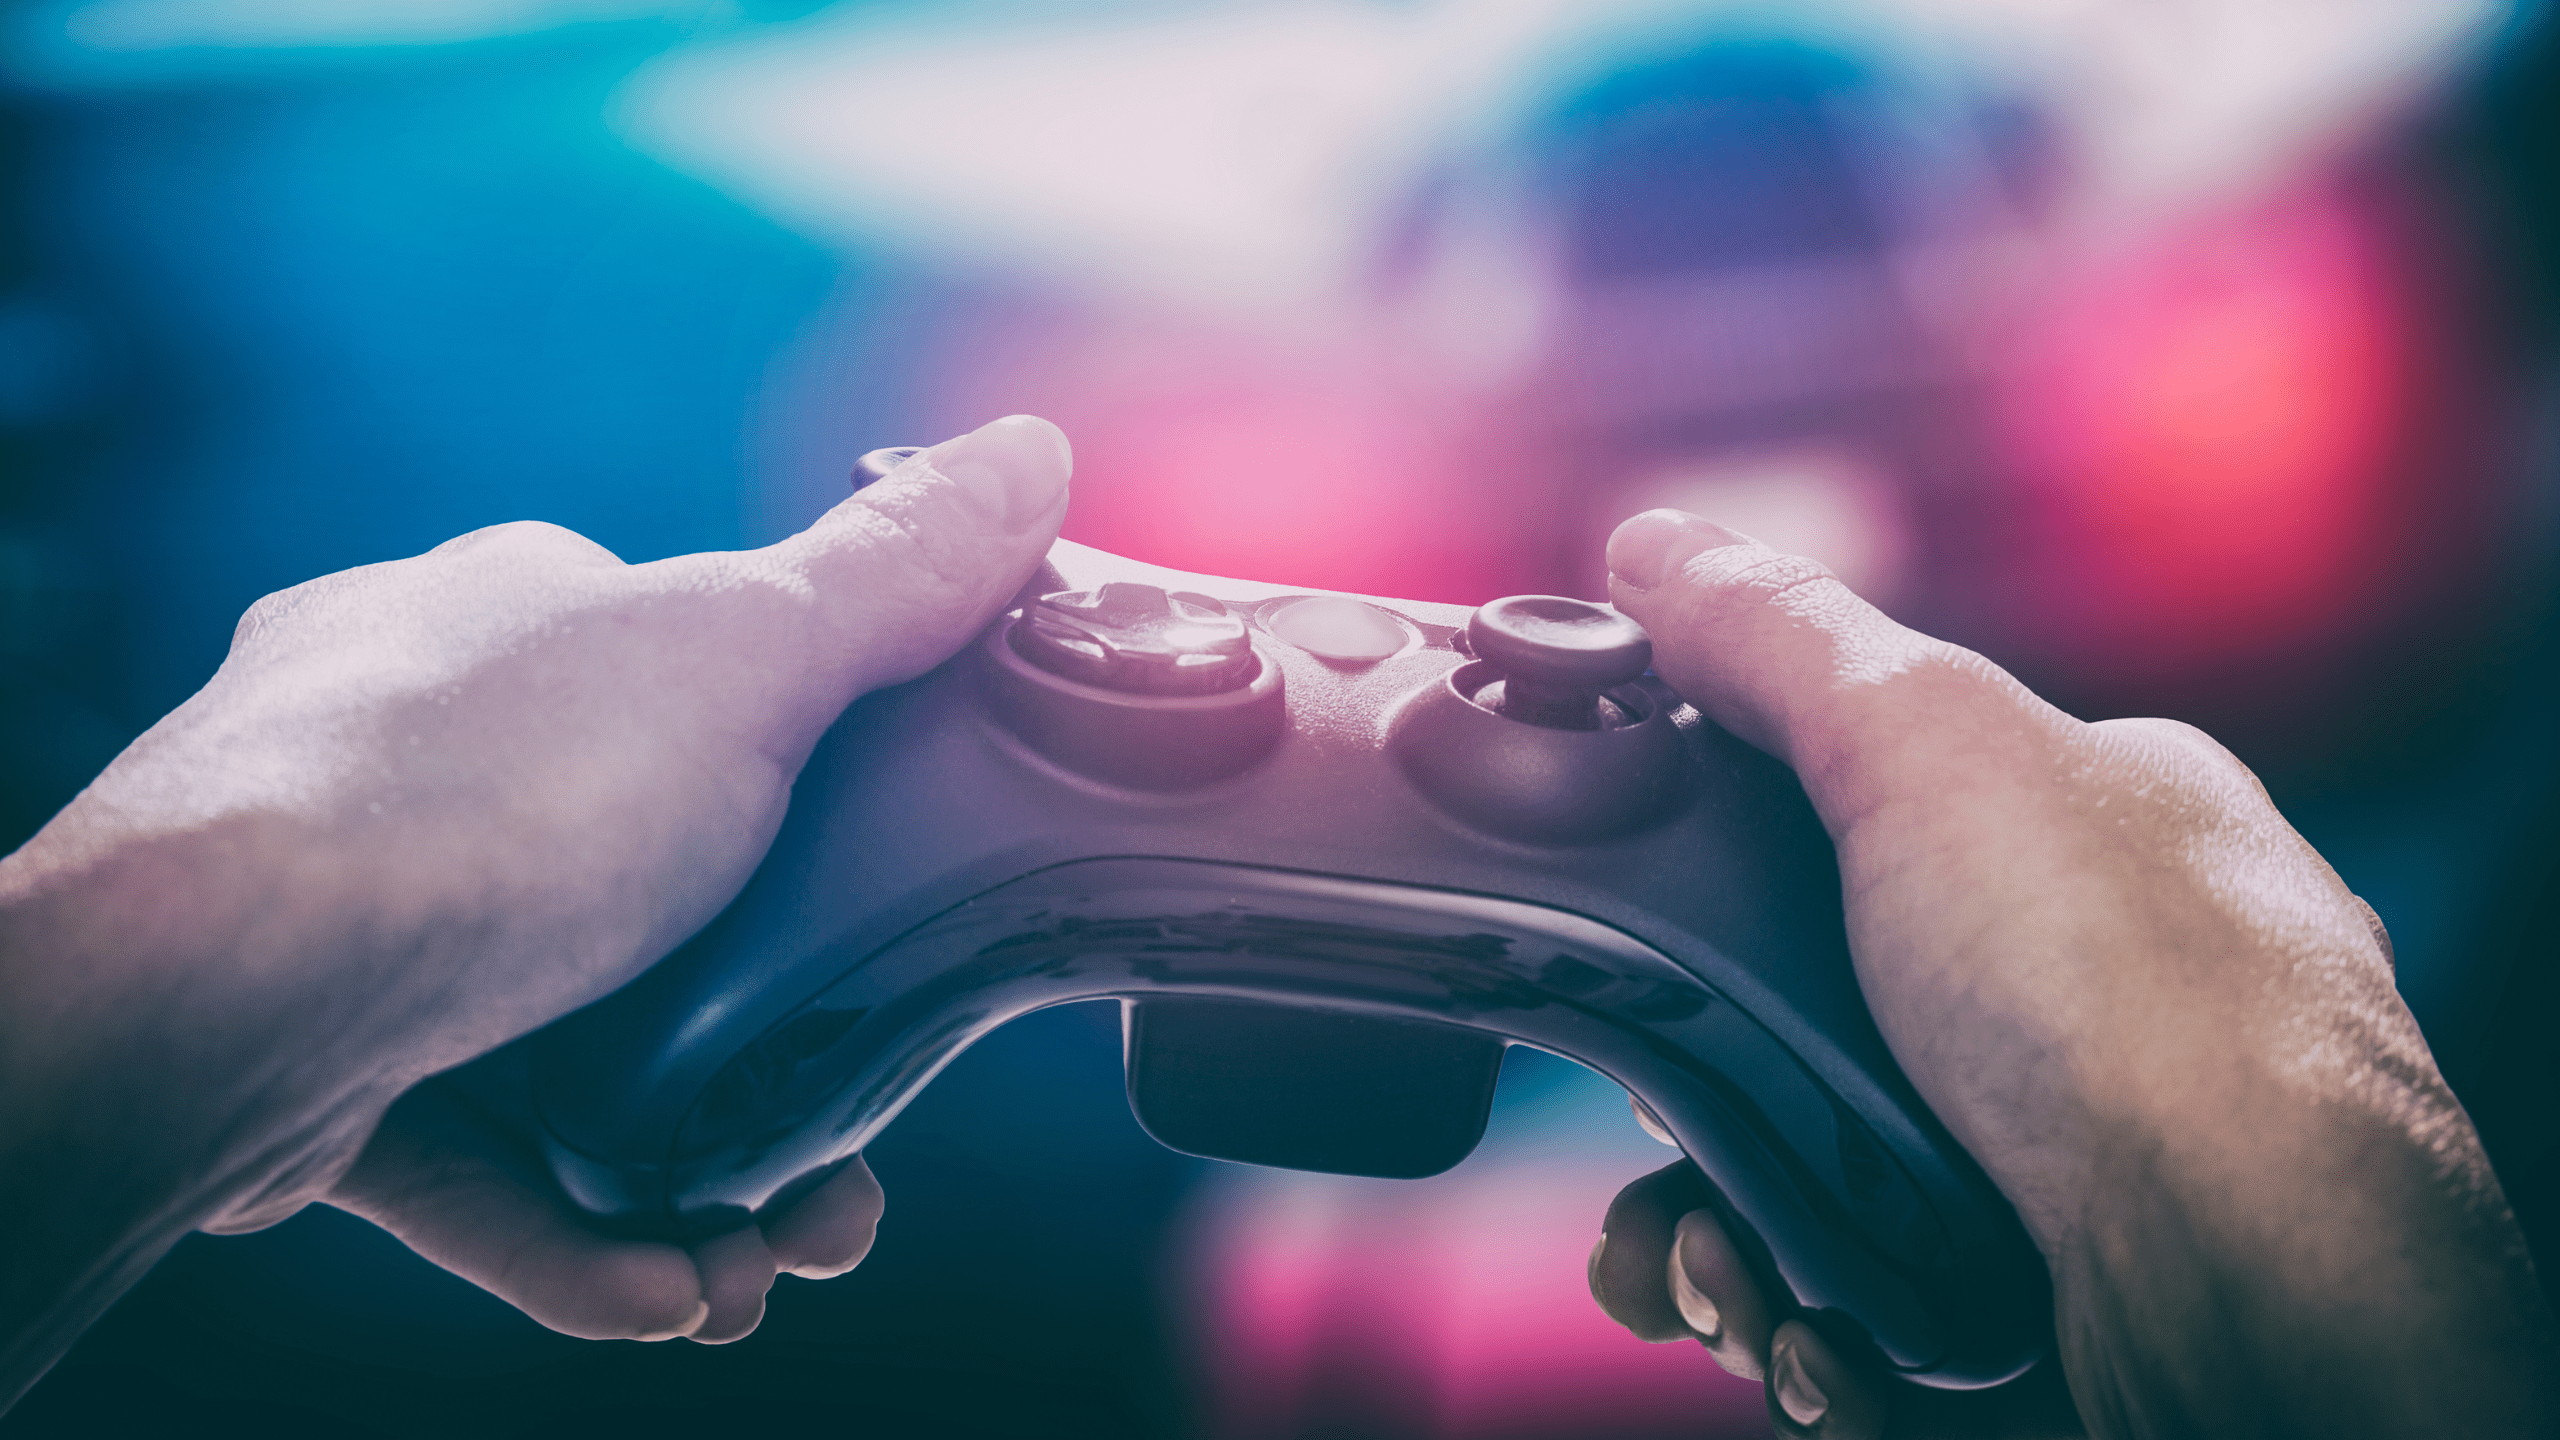 How do hackers target children on video games?